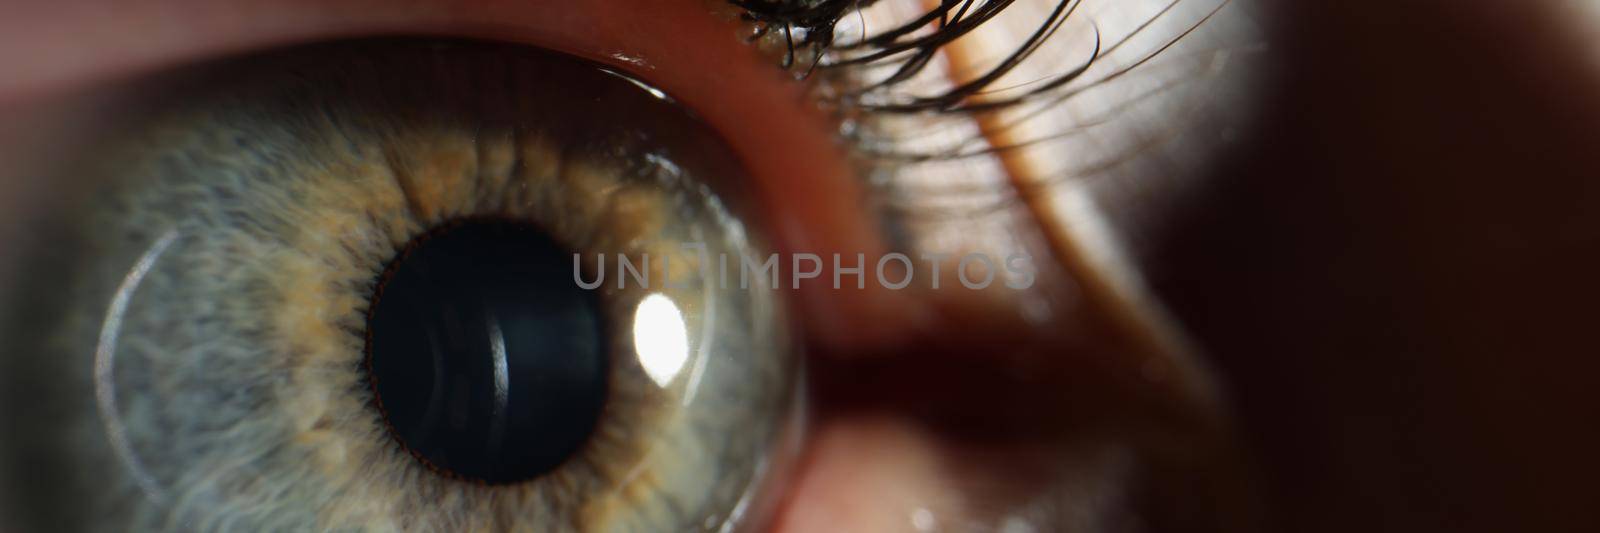 Female eye with black painted eyelashes closeup. Laser vision correction concept